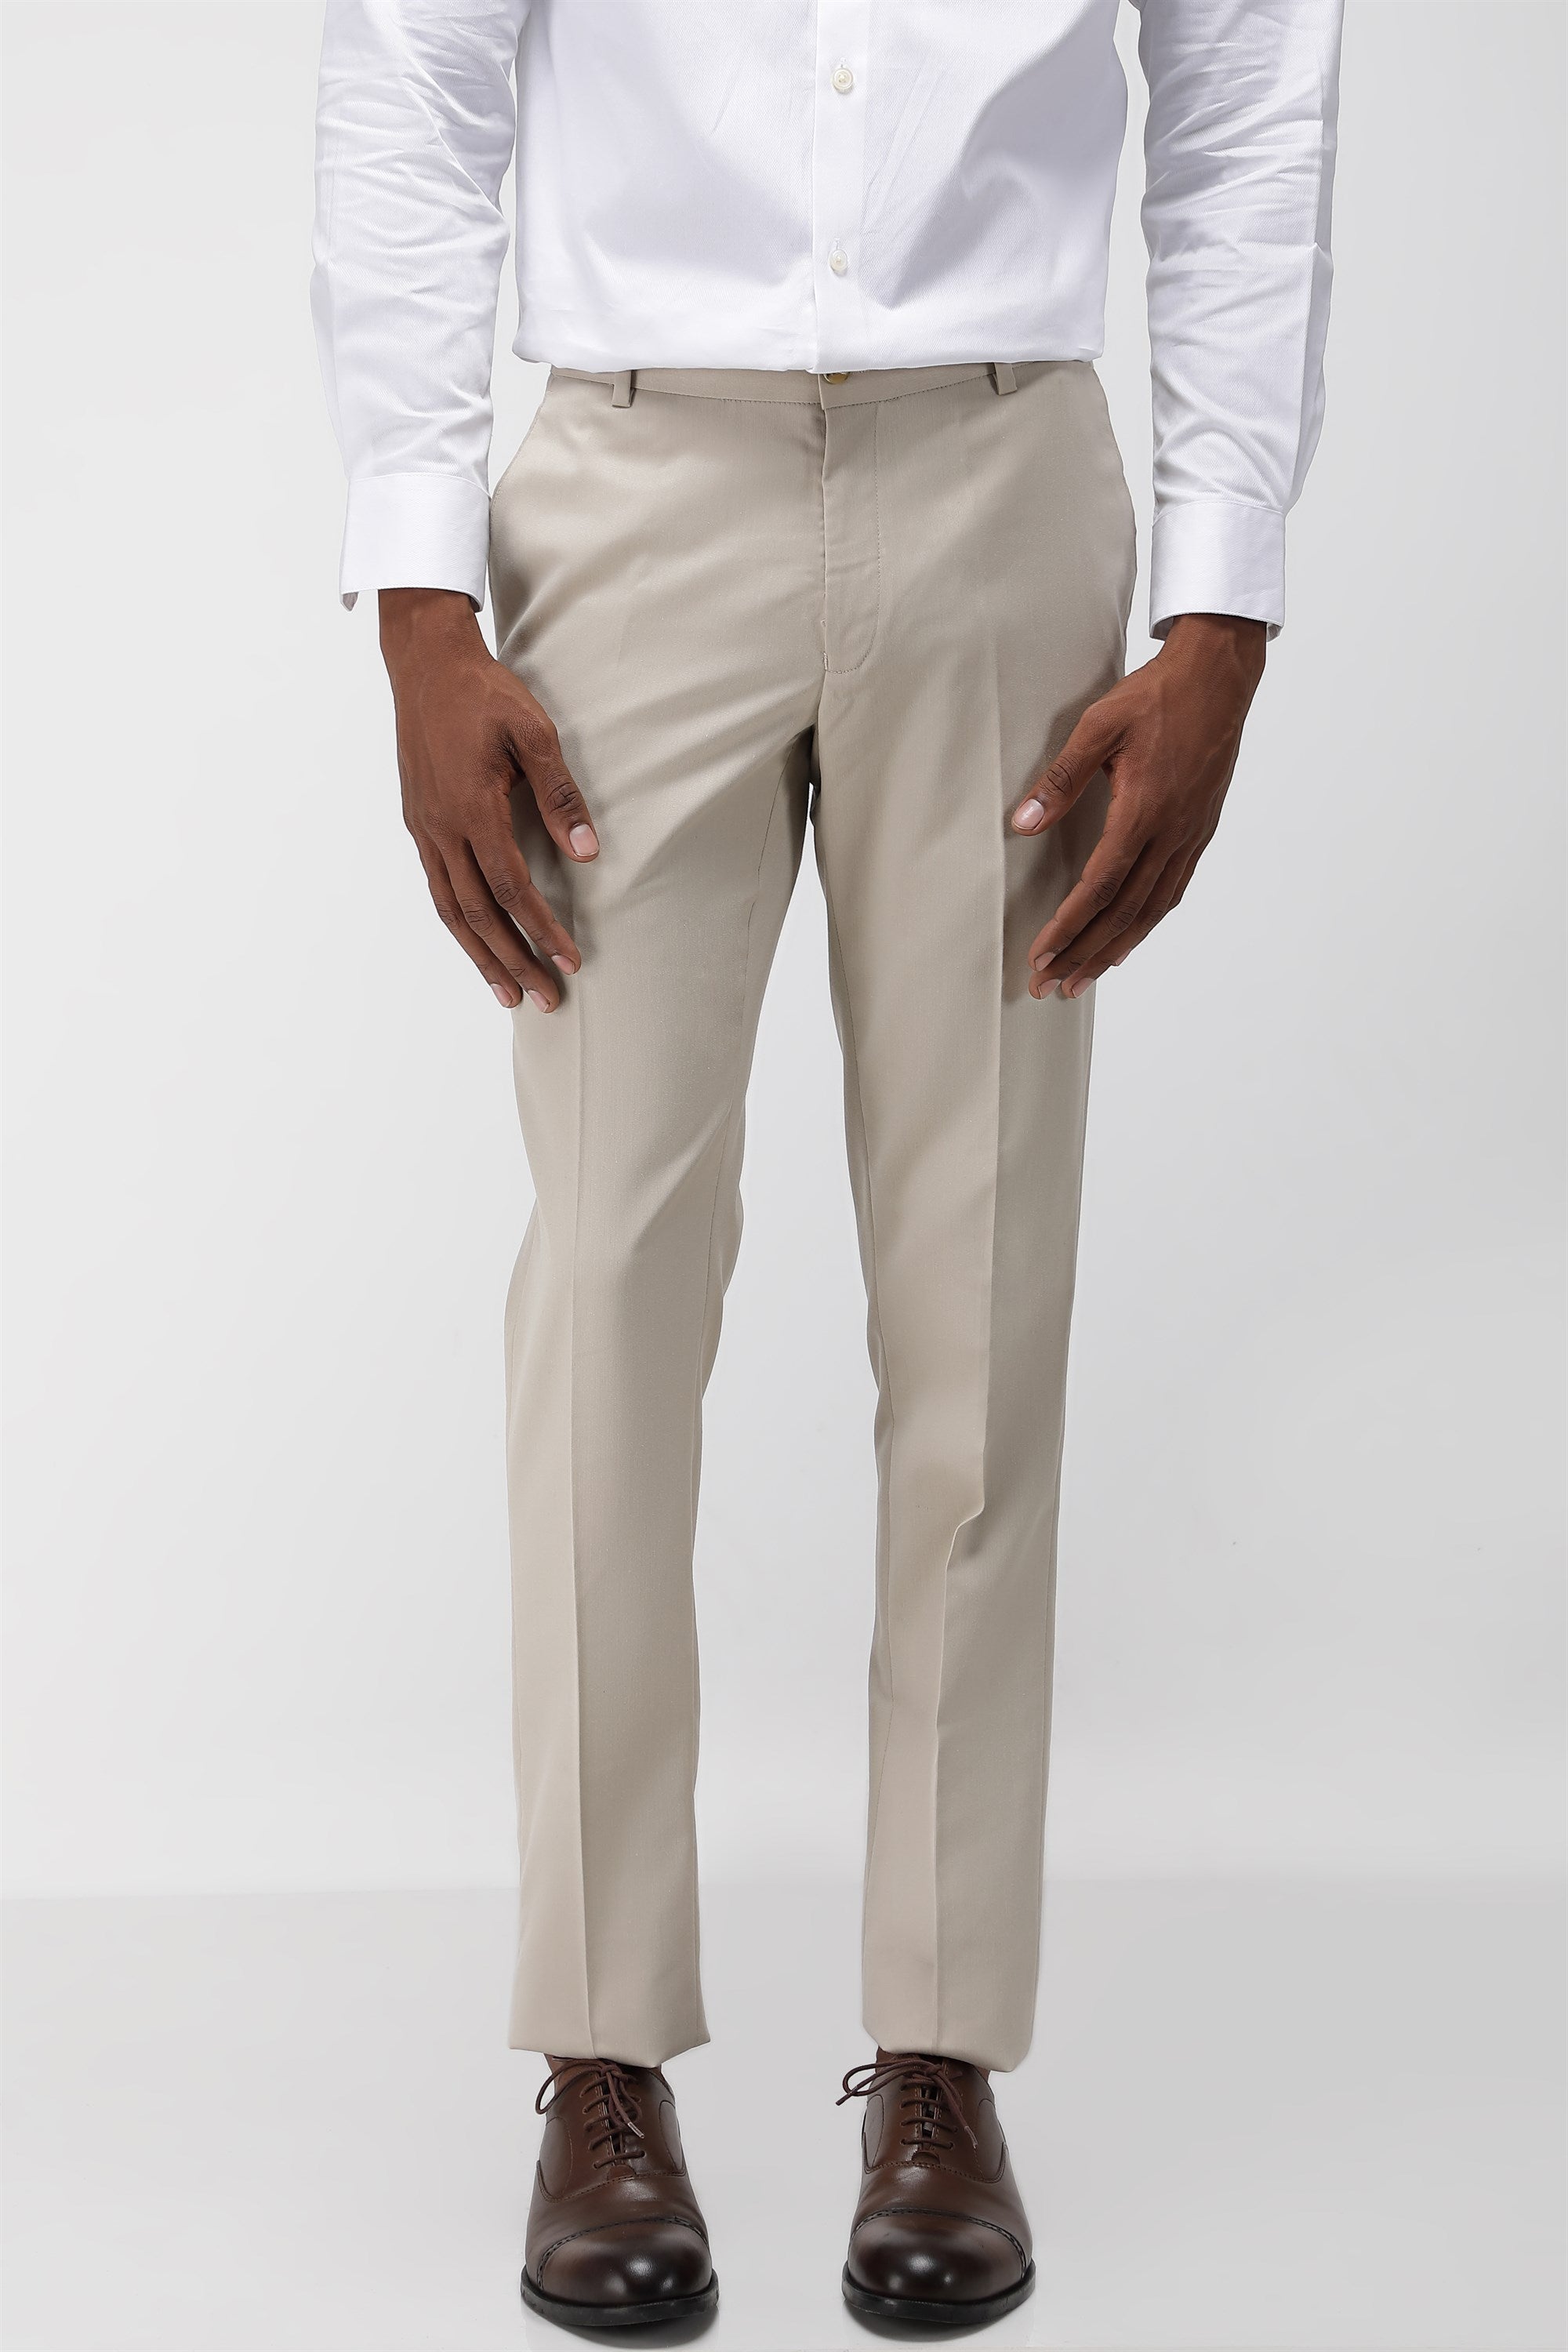 Emporio Armani Men's Straight Leg Mid-Rise Trousers, Brand Size 46 (Waist  Size 30